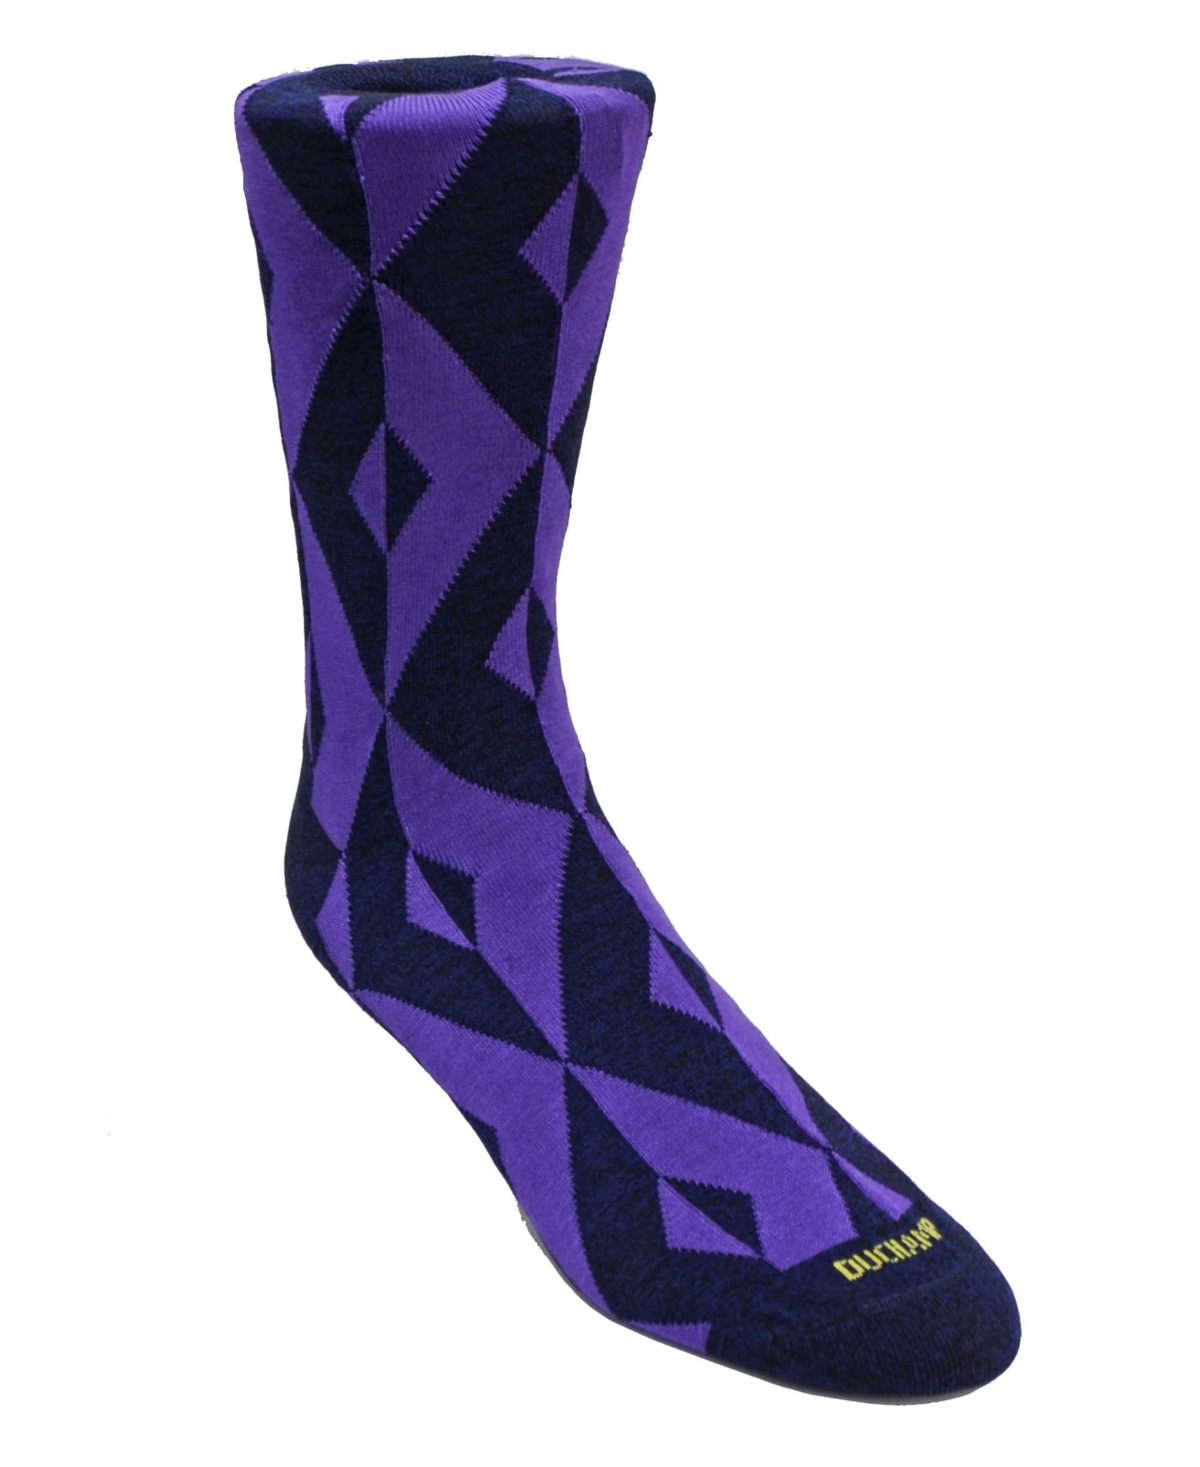 Men's Geometric Design Dress Sock - Purple